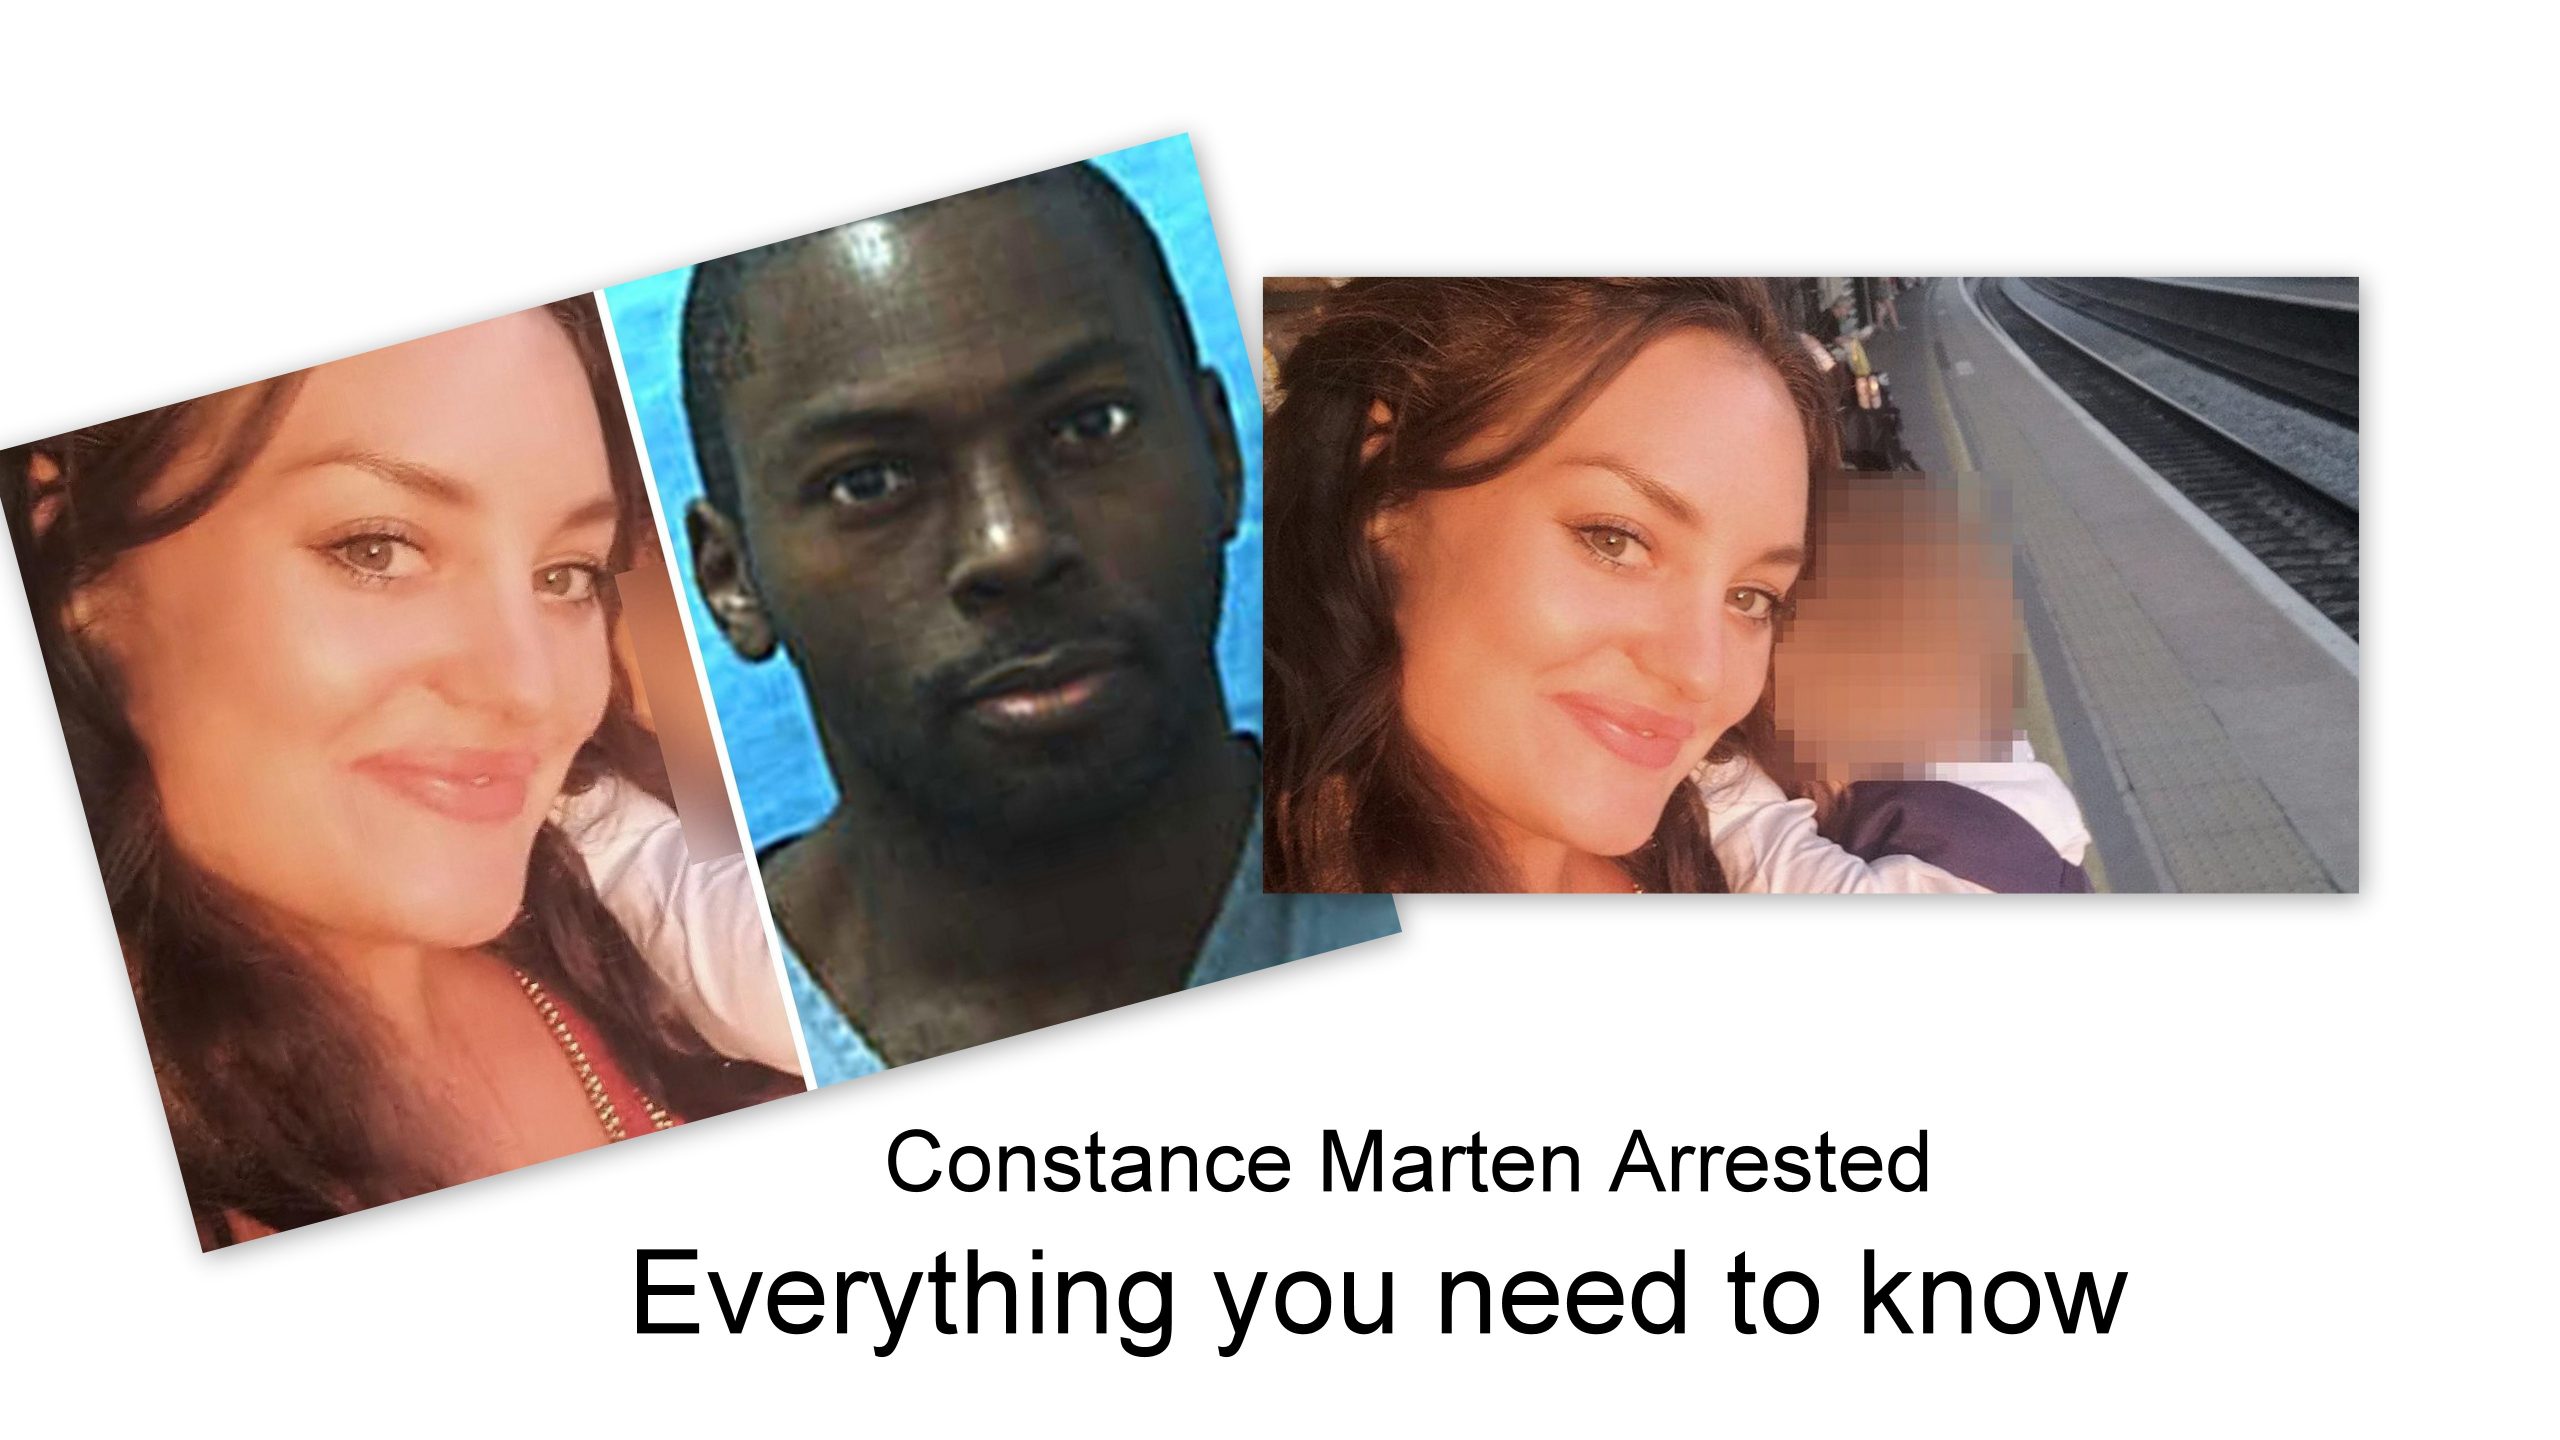 Constance Marten arrested